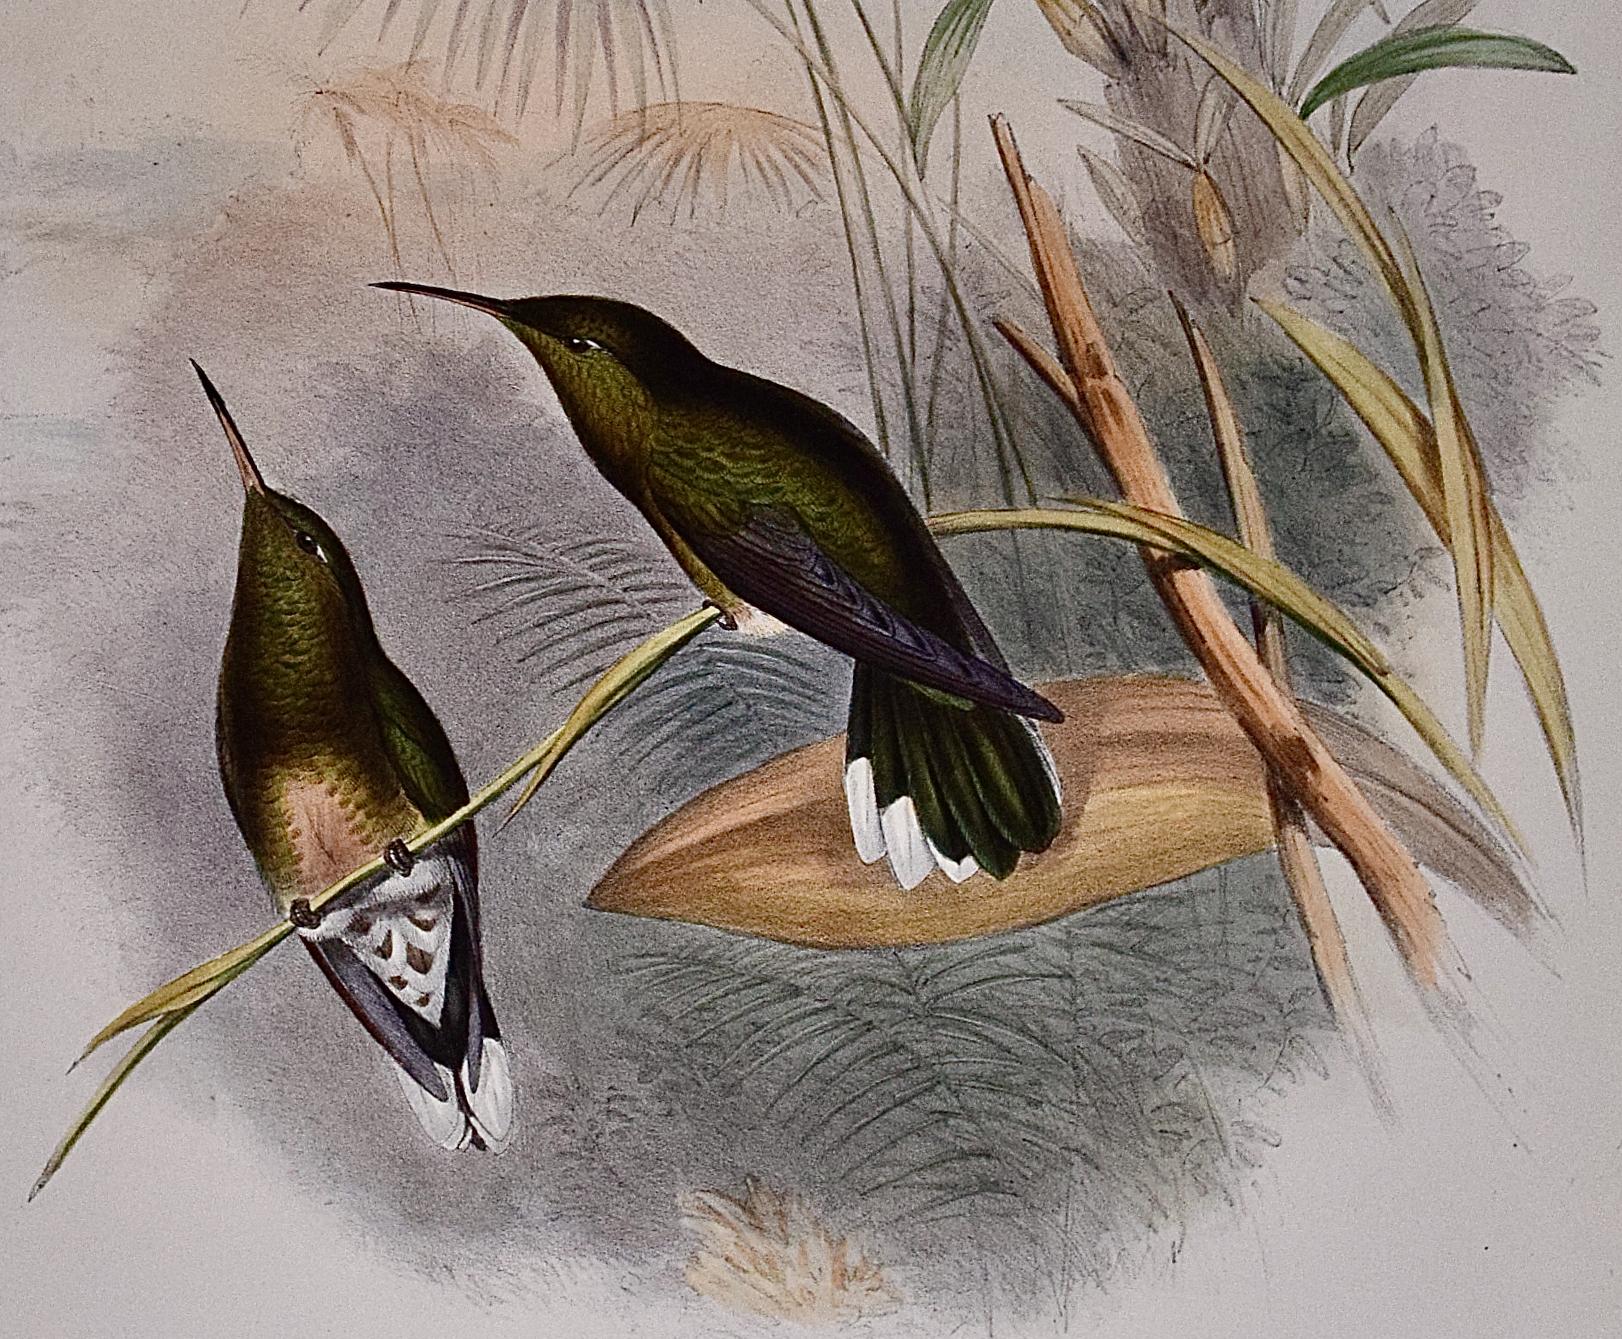 j gould and h.c. richter hummingbirds